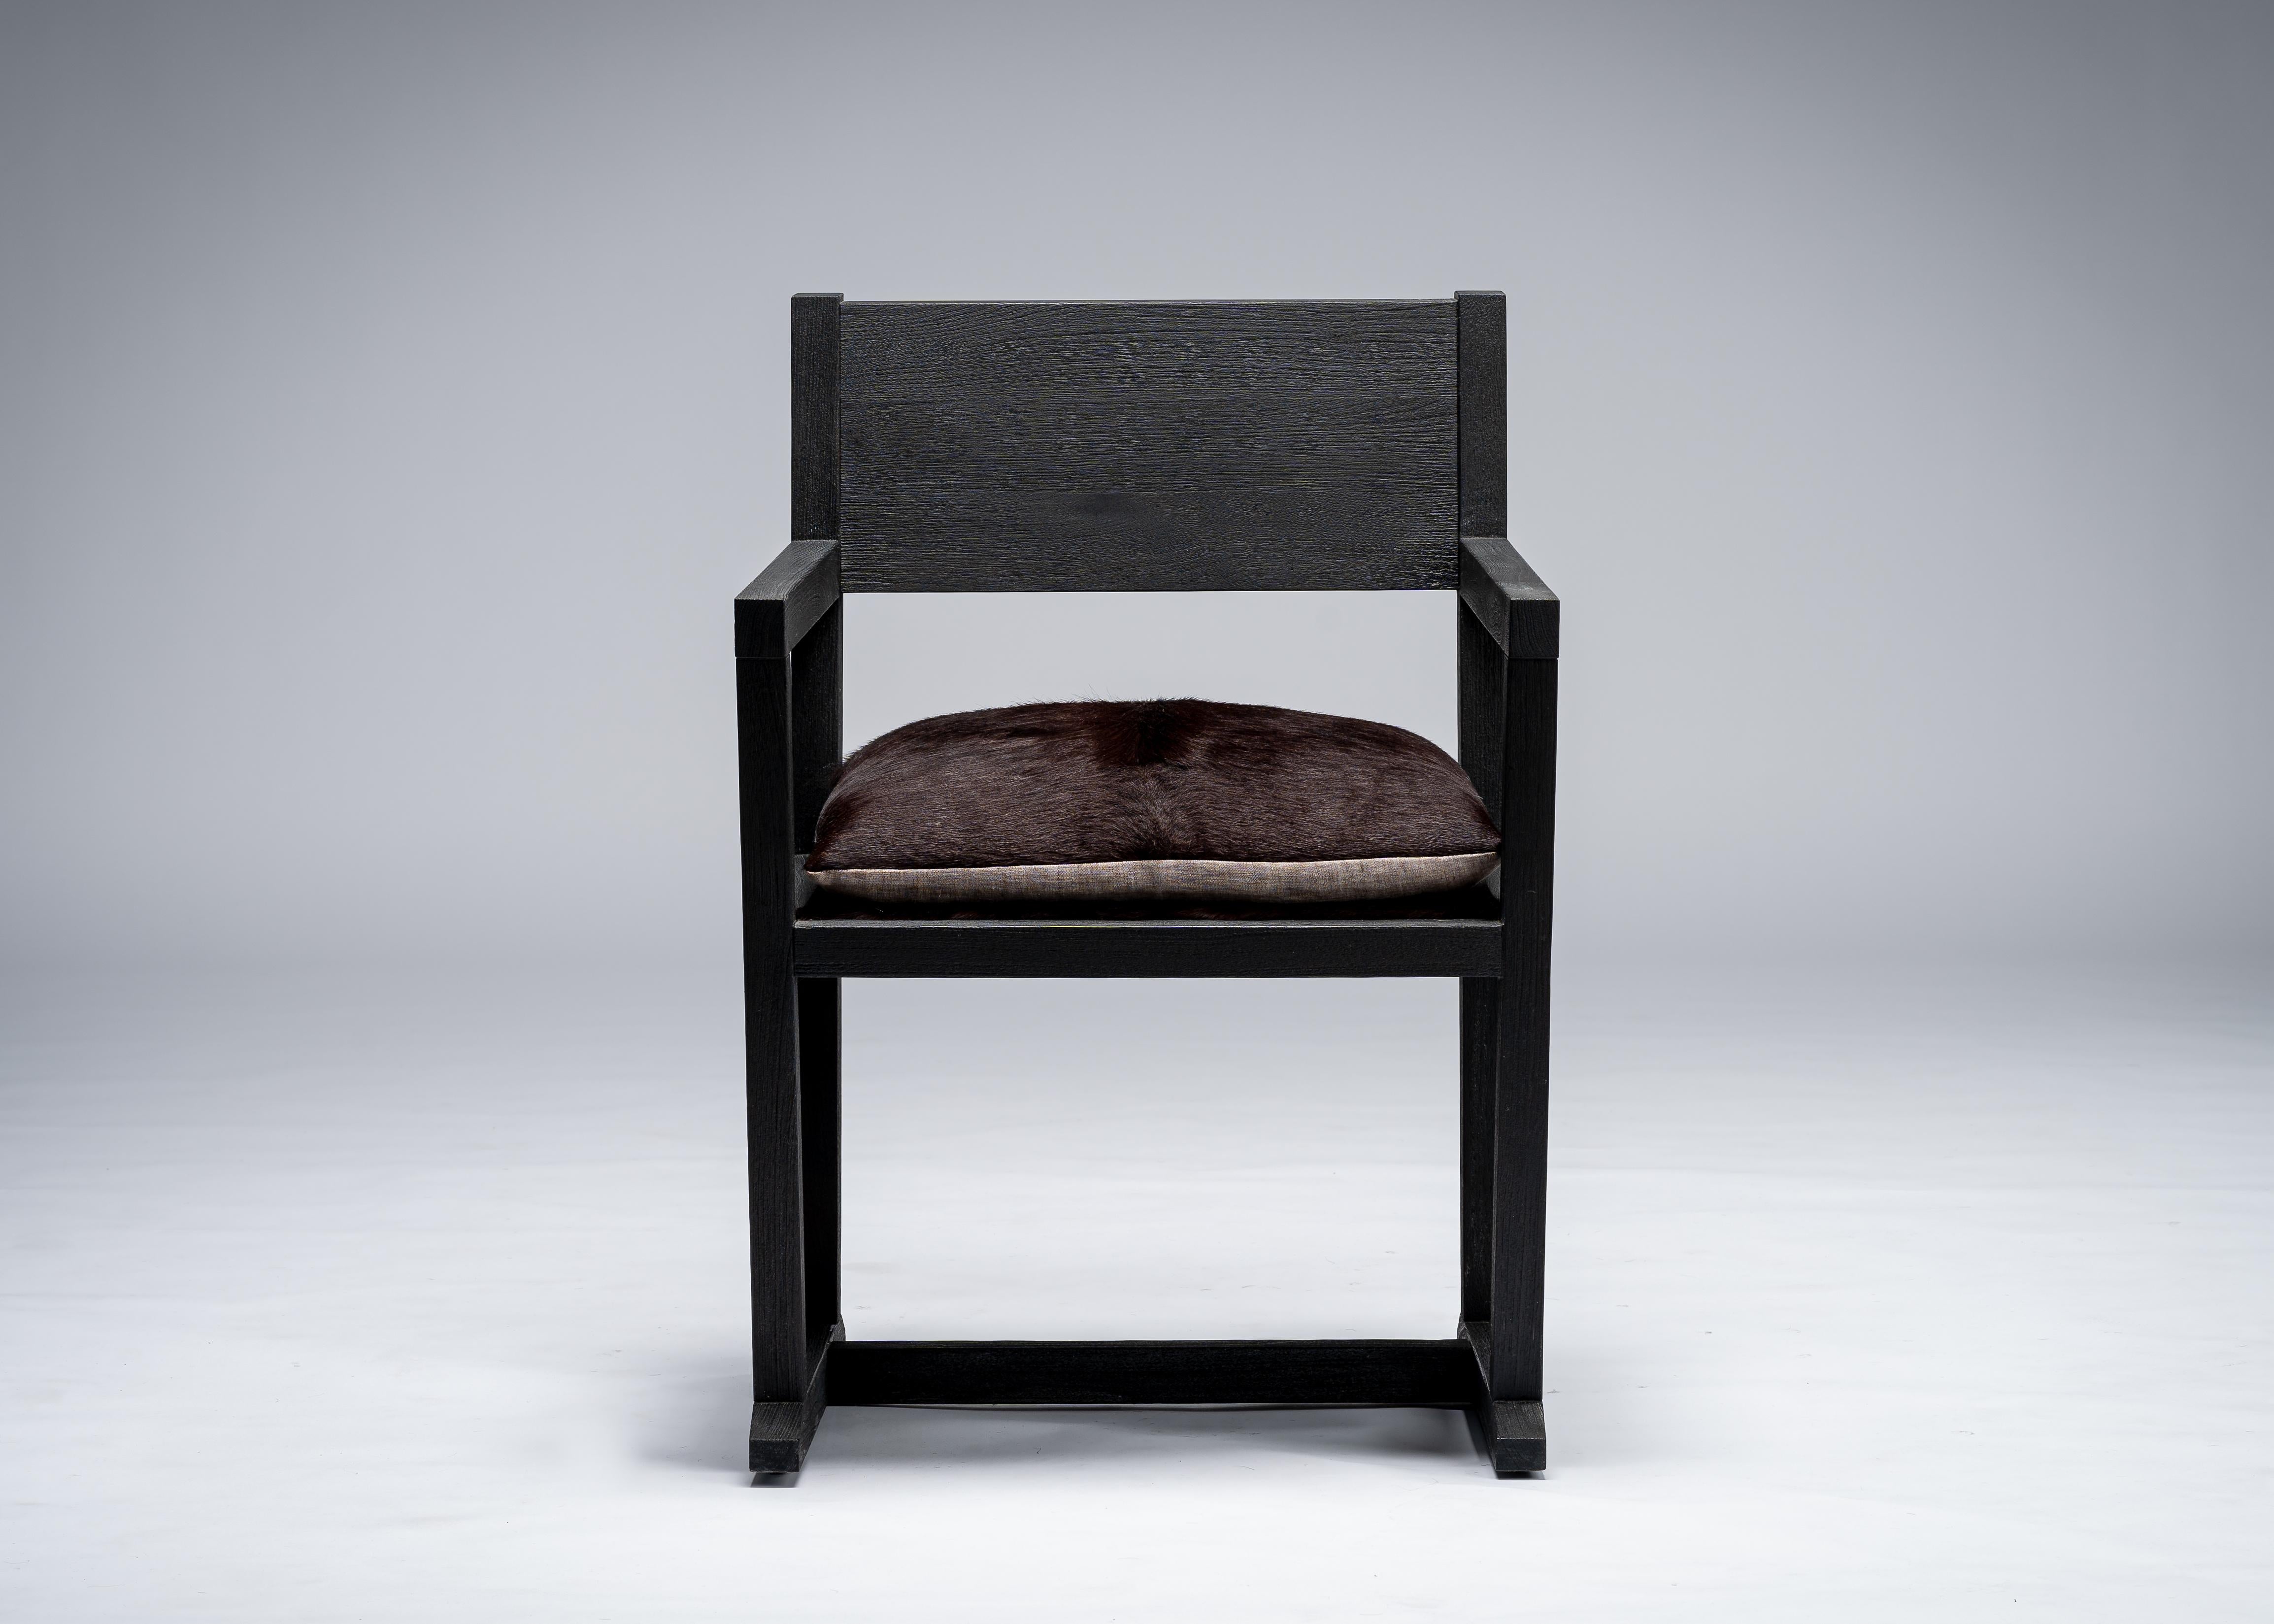 LOUIS chair by Mandy Graham

LOUIS
L01 - Chair / Armchair / Desk / Dining chair
Sandblasted oak/hairy cowhide seat
Measures: 24